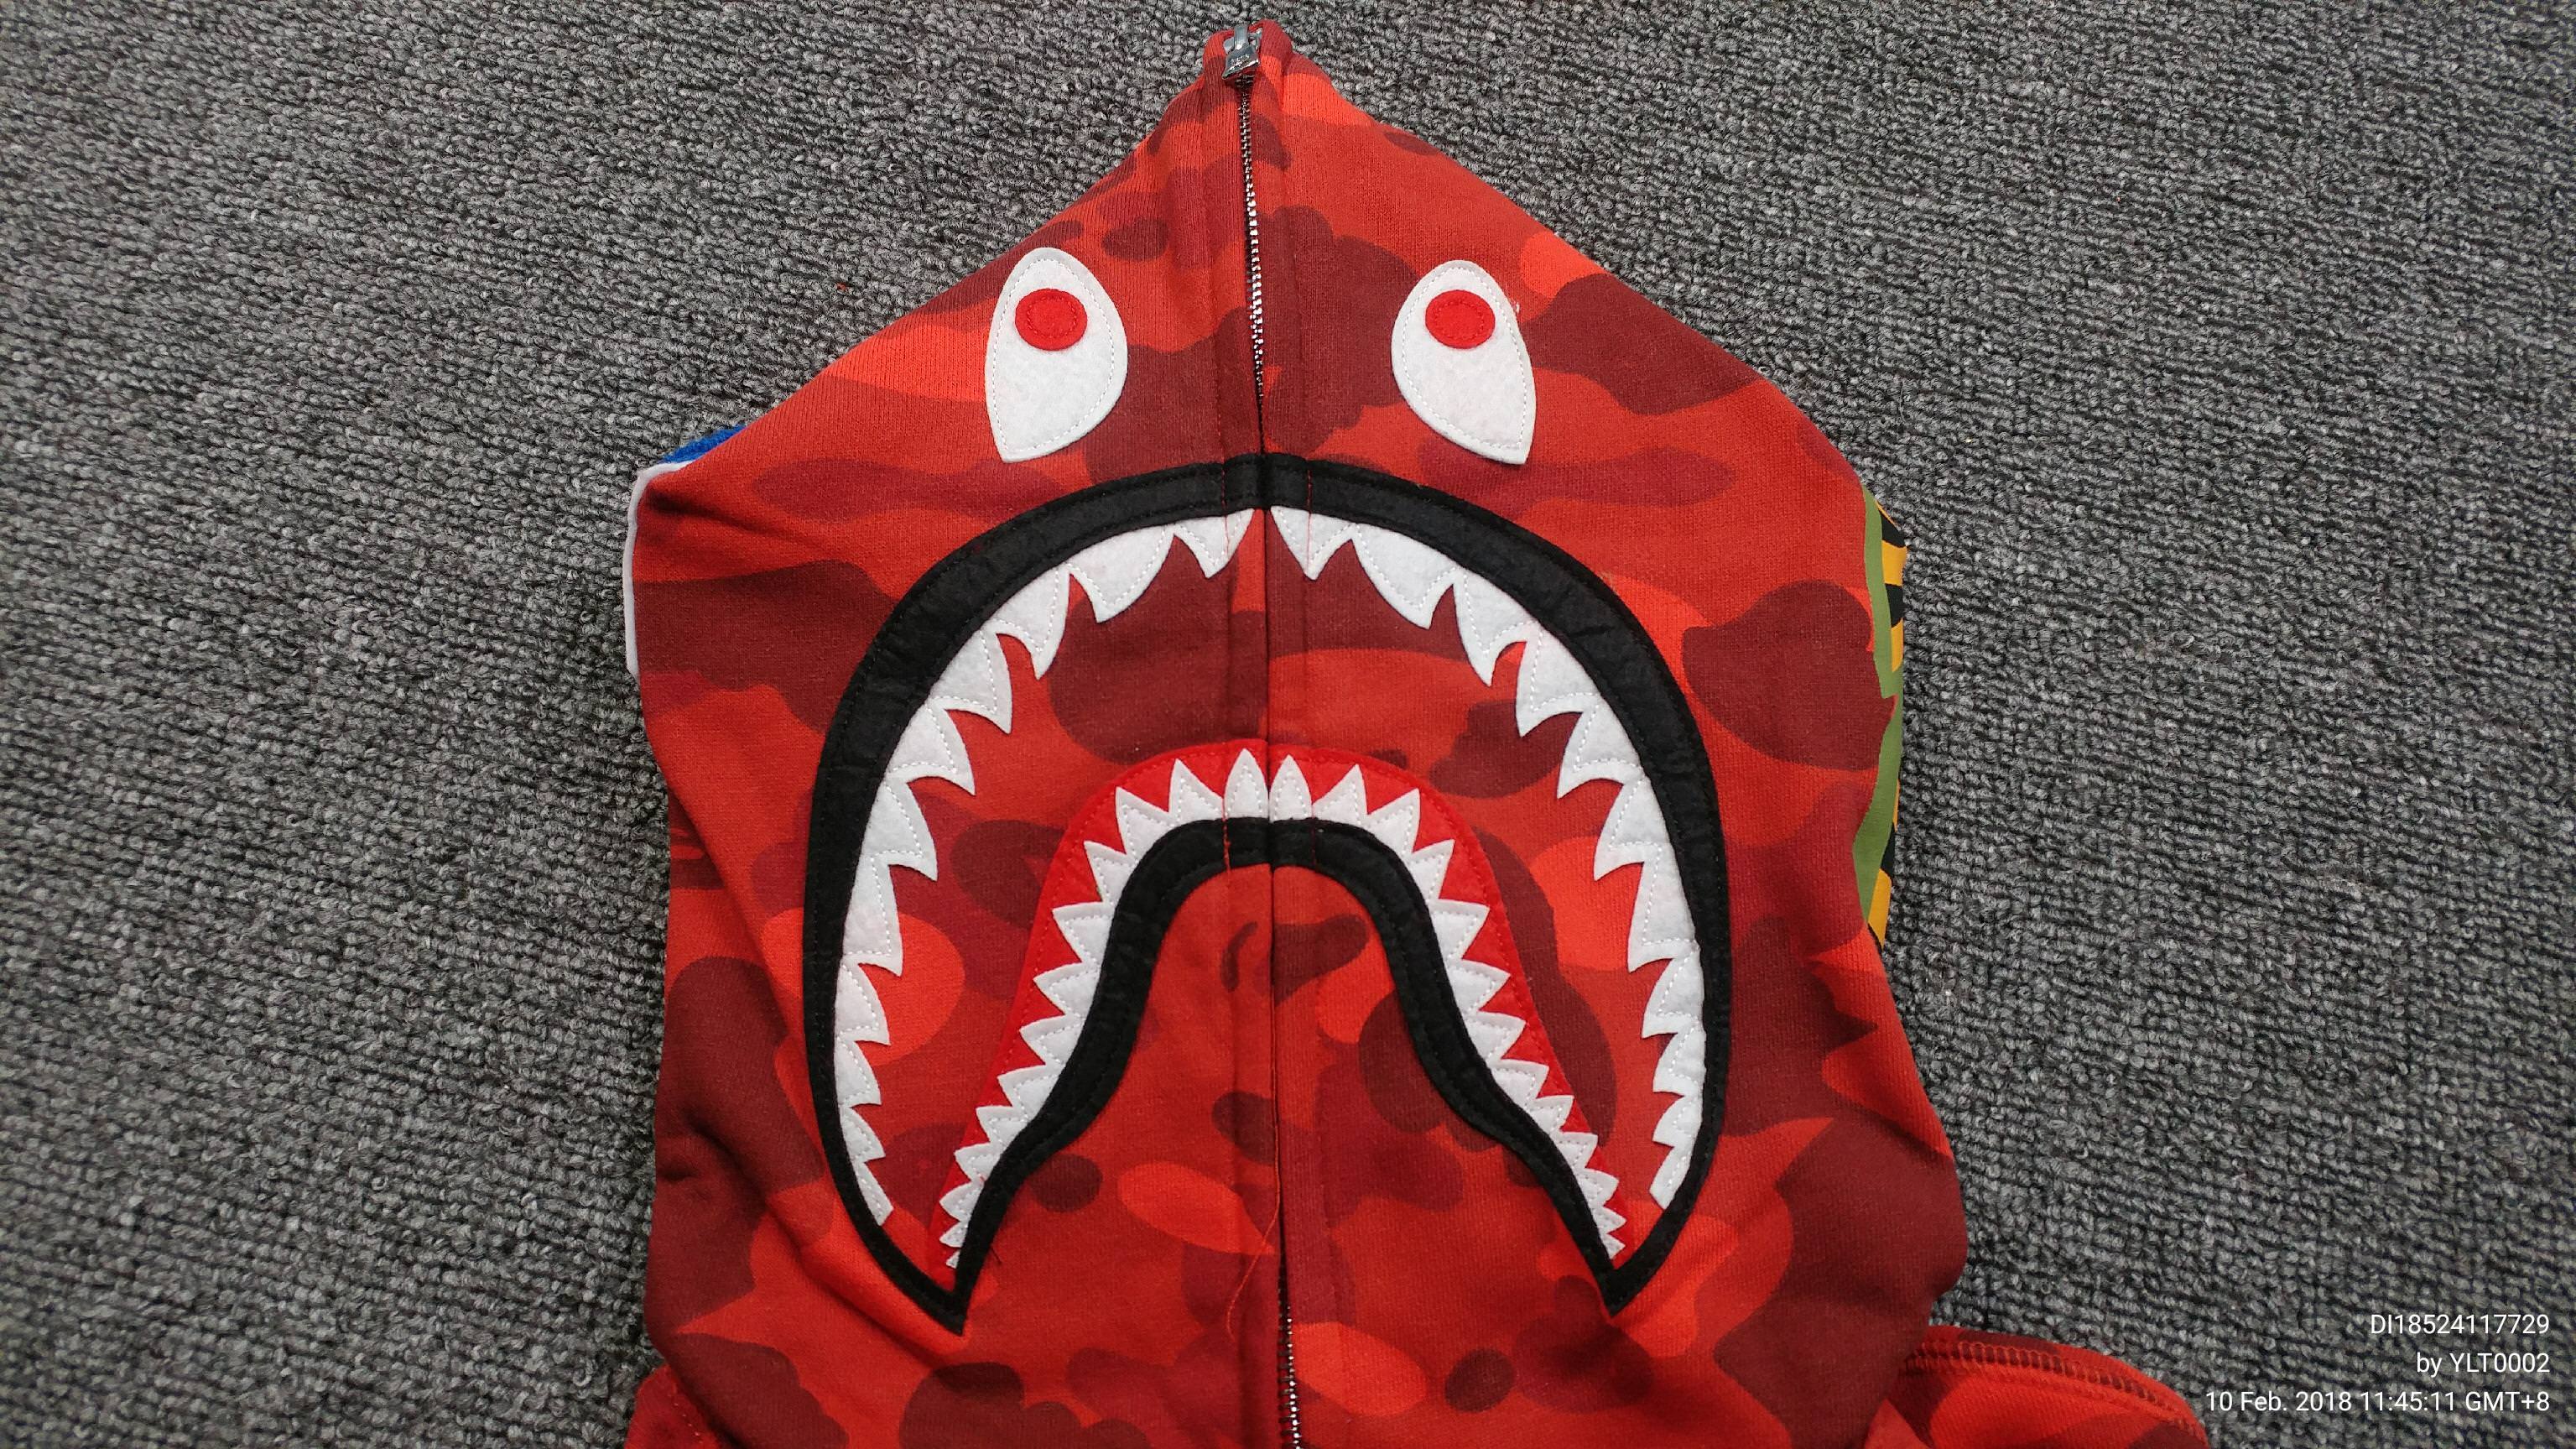 Red BAPE Shark Logo - KingShark's Red Bape Shark Hoodie